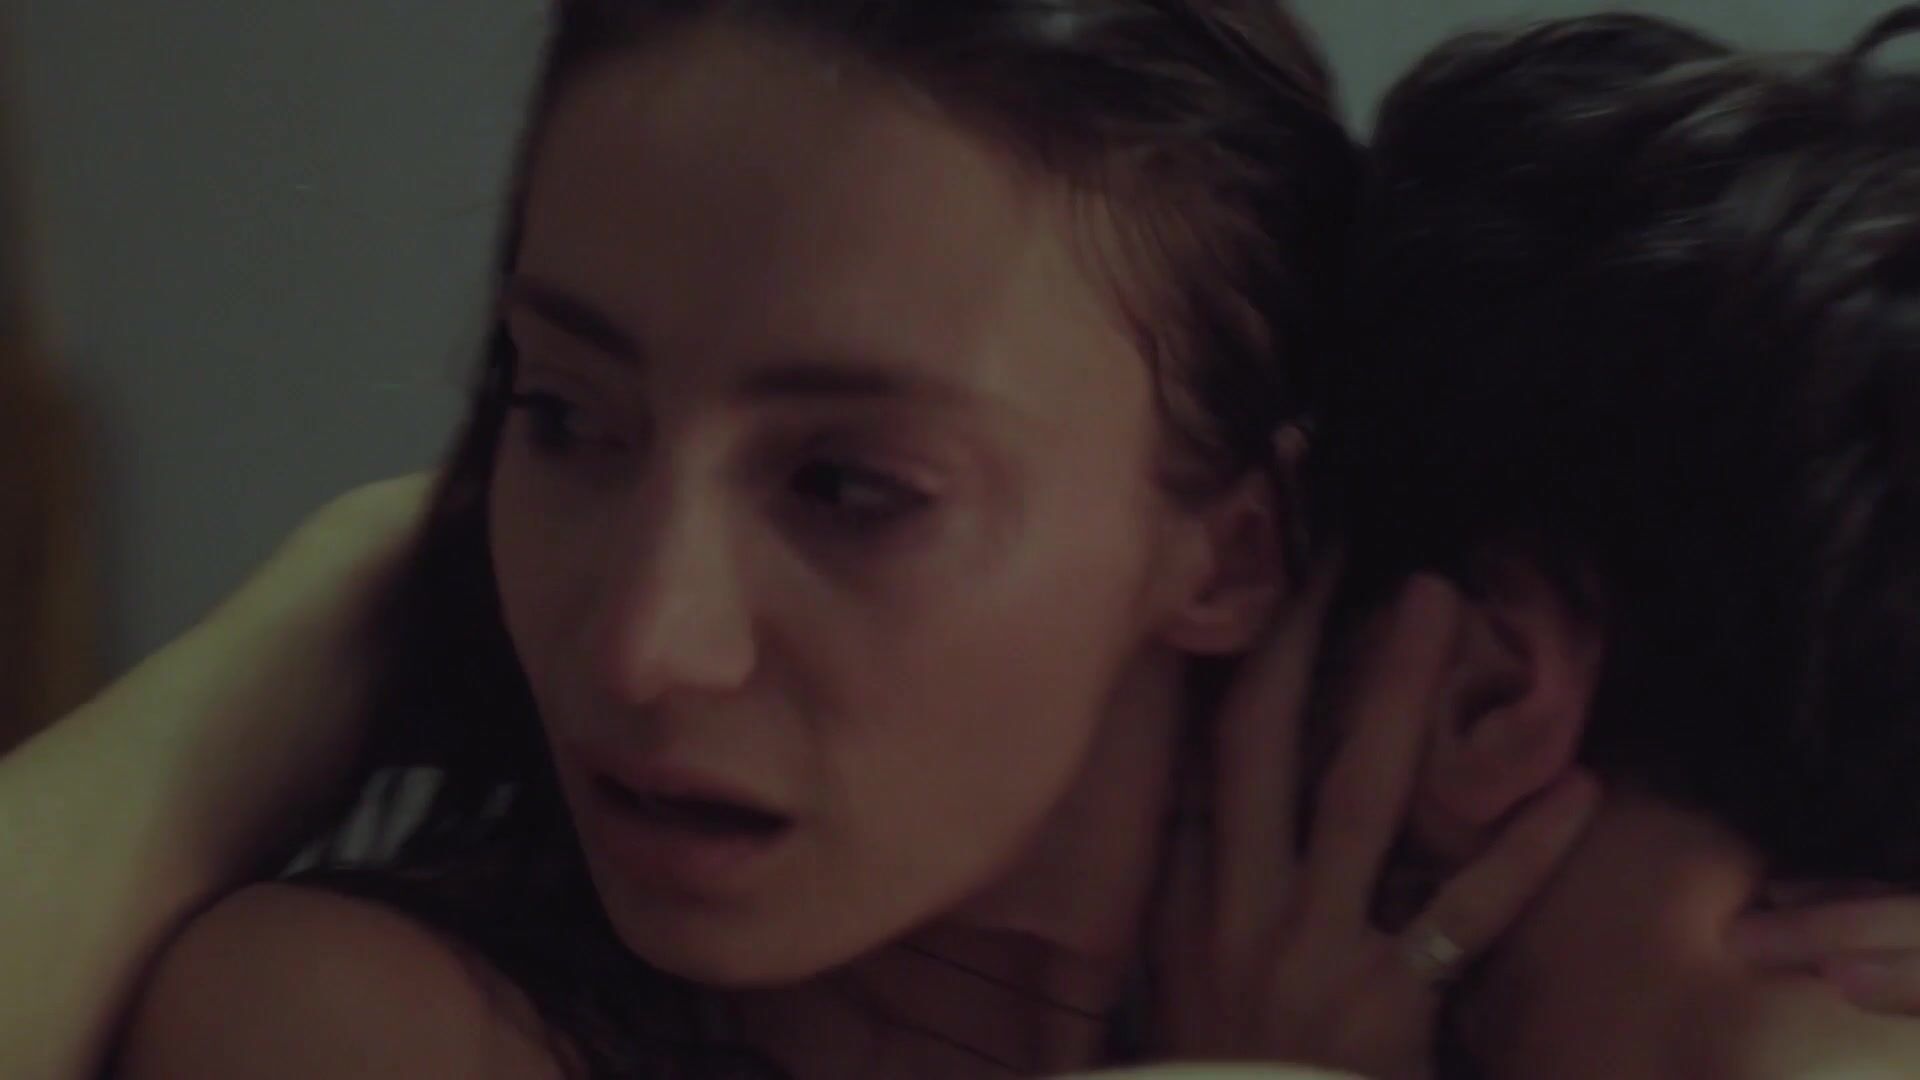 Hot Milf Actress sex scenes from Guzva (2019) - Gordana Djokic, etc. Music